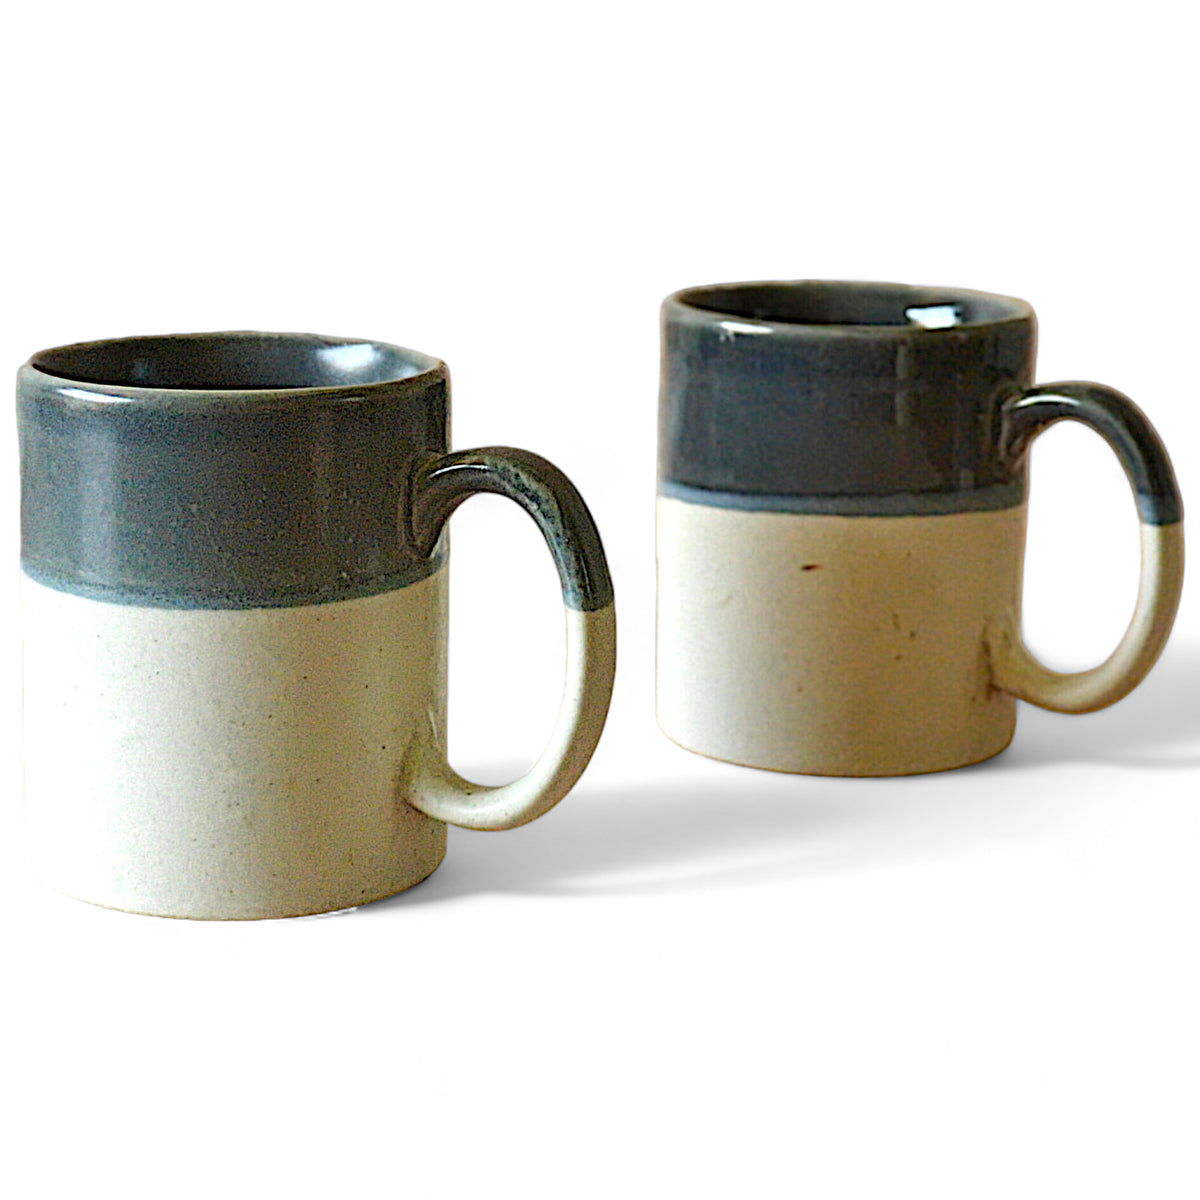 Claymistry Ceramic Mug Combo | Set of 2 | Black & White | Coffee Mugs | Ceramic Combos | Tea Kettles | 12*8*10 cms | Glossy